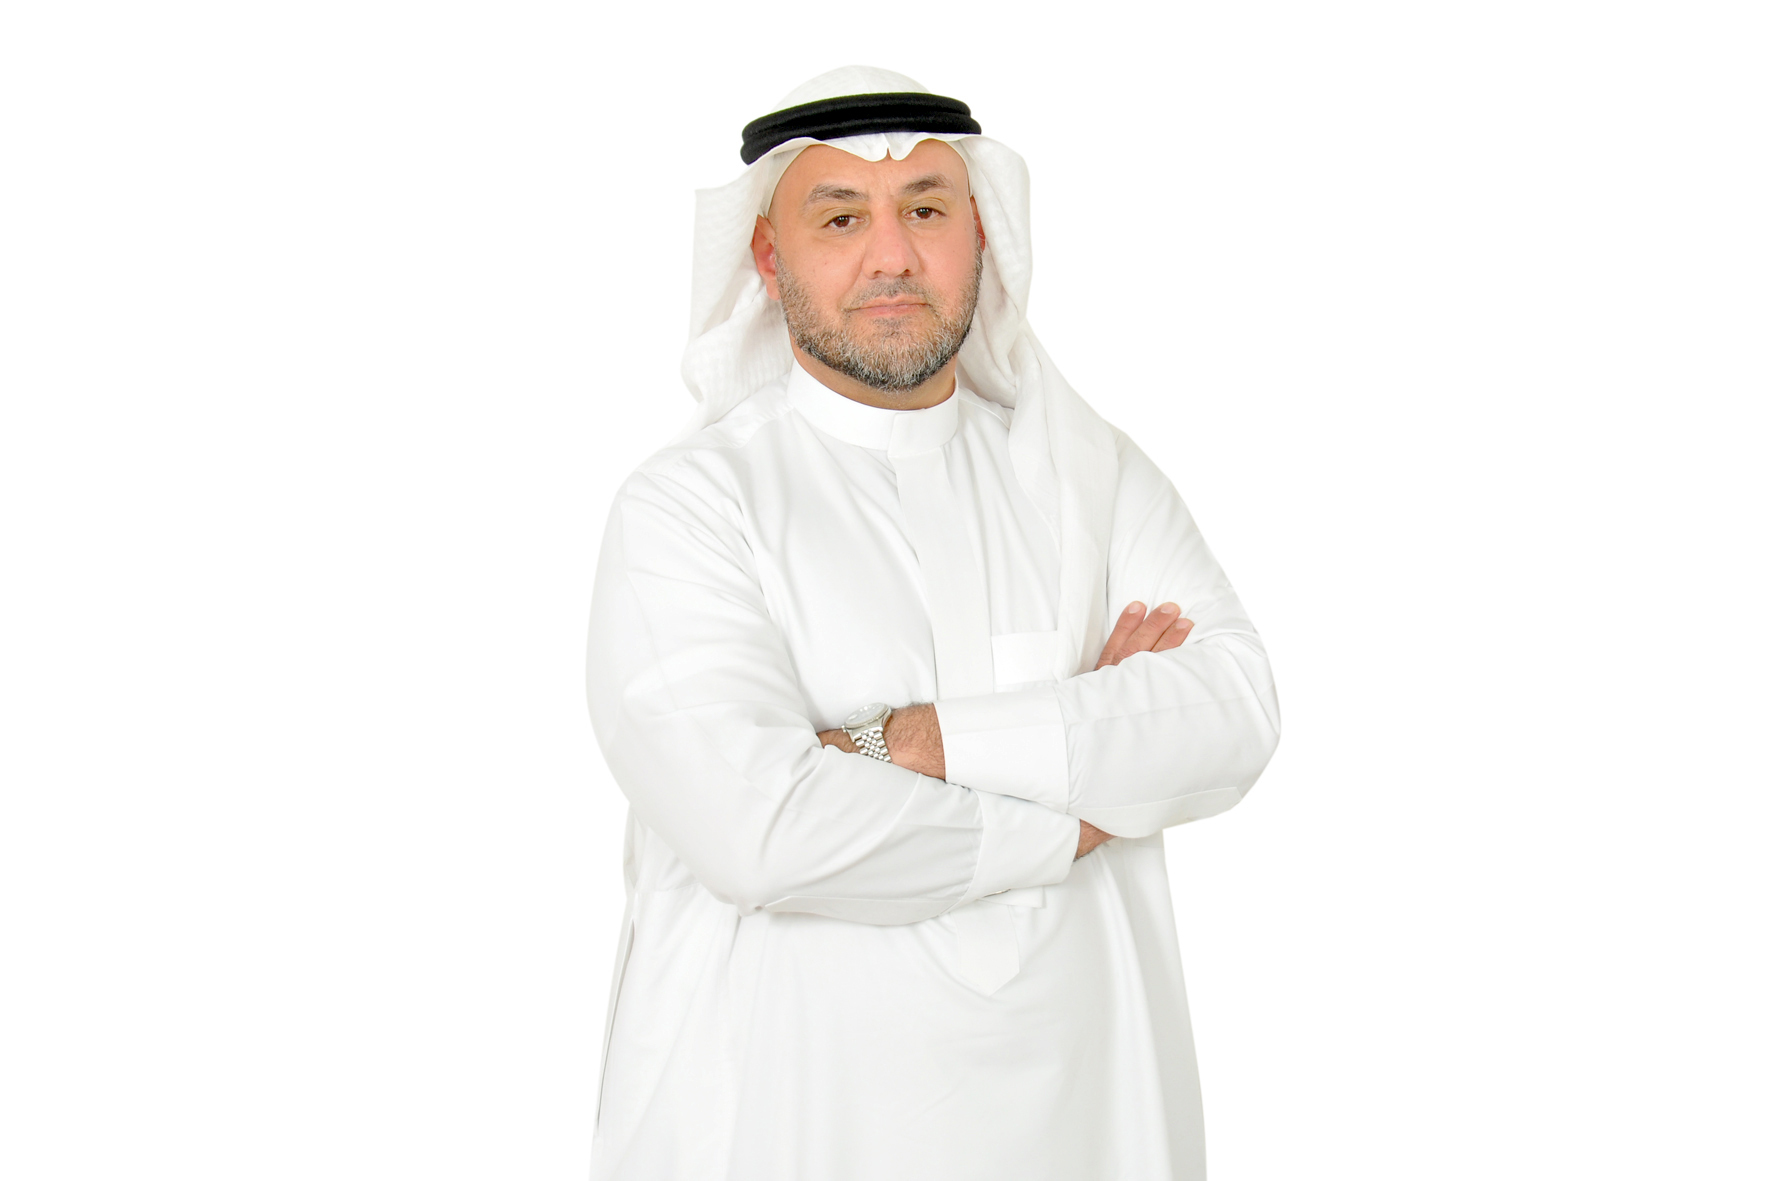 Mr. Bader Muhammad Al-Abdulwahab